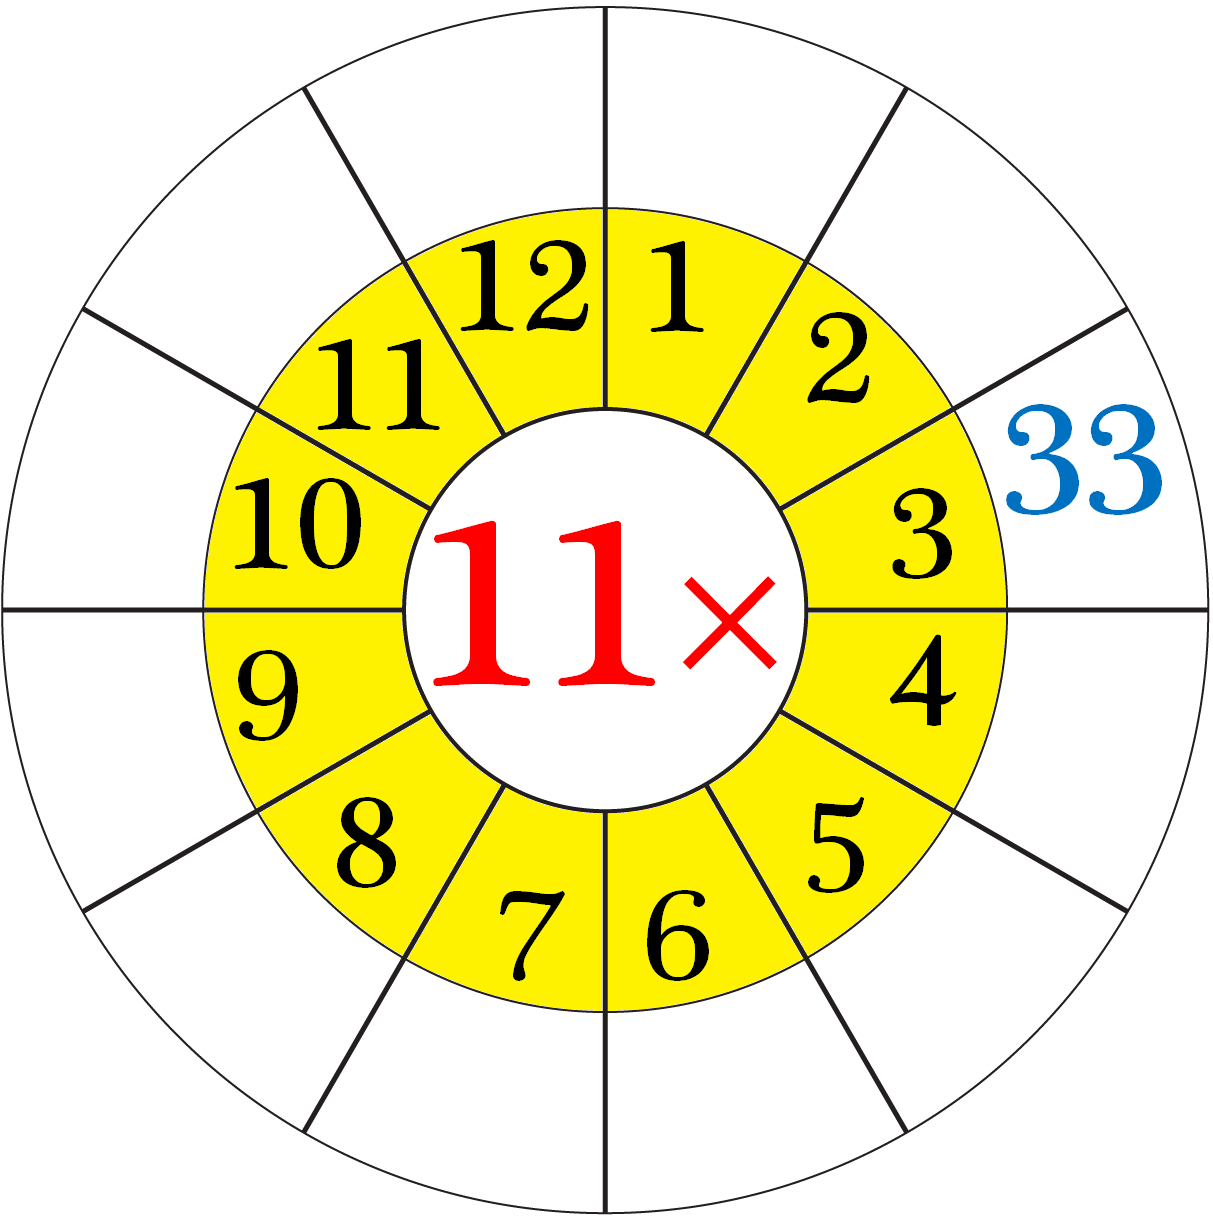 Worksheet on Multiplication Table of 11